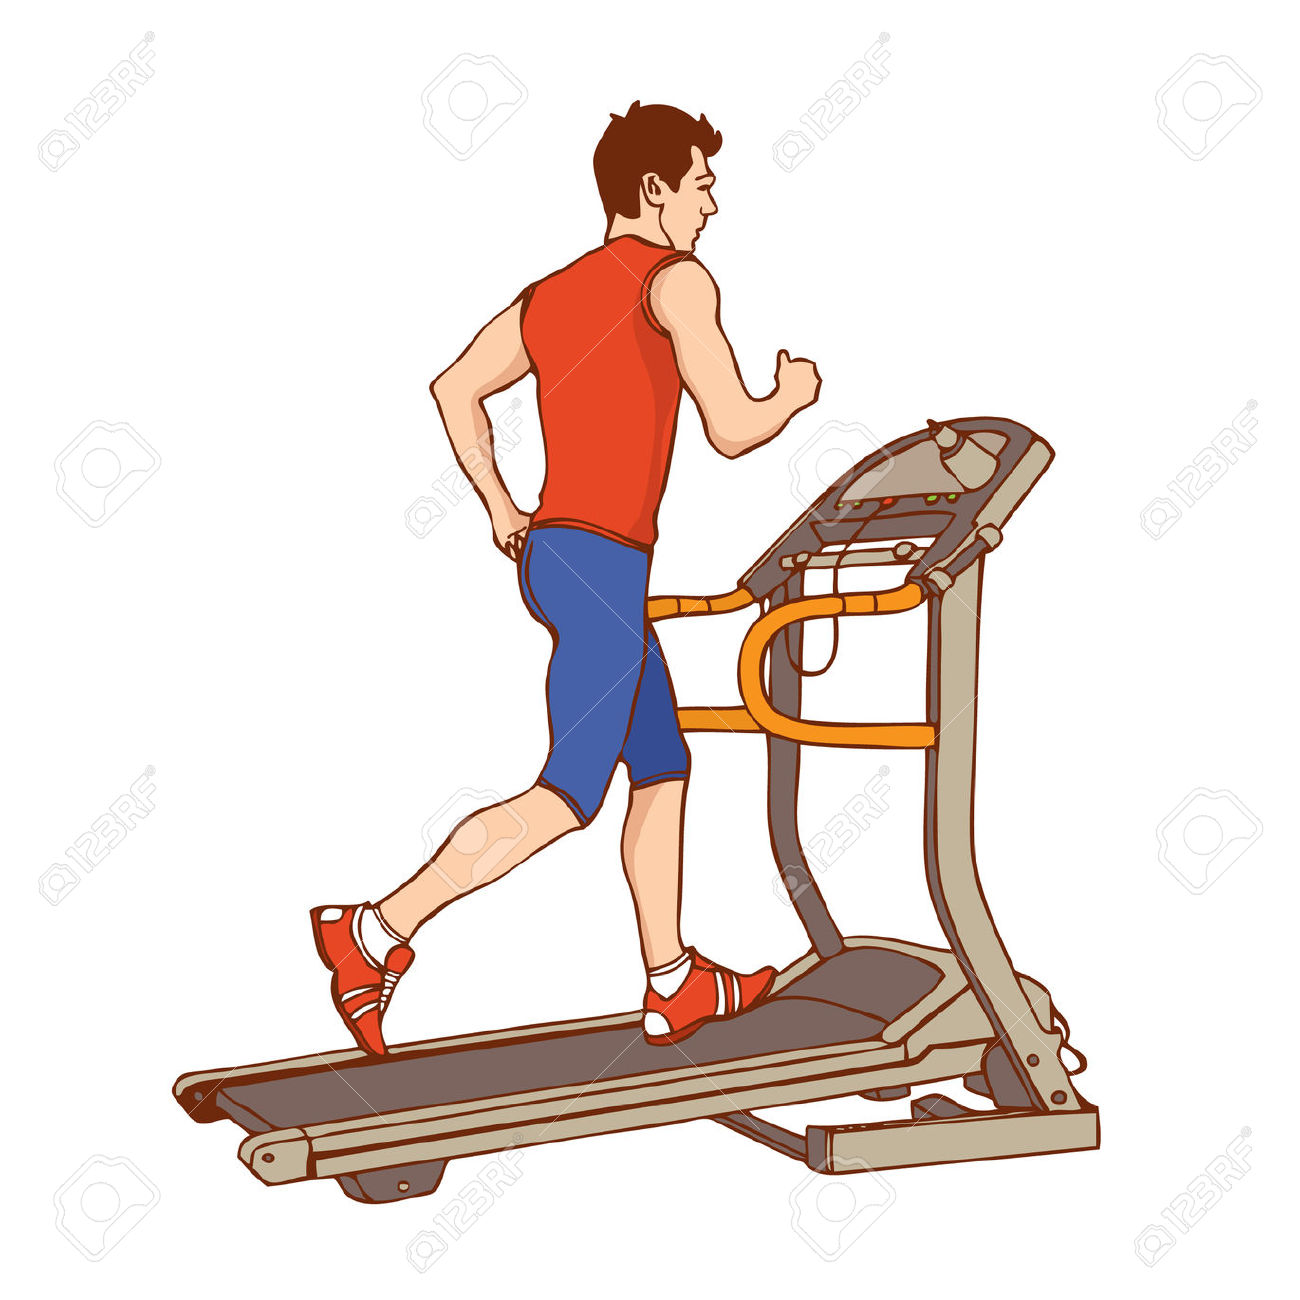 man on treadmill clipart - Clip Art Library